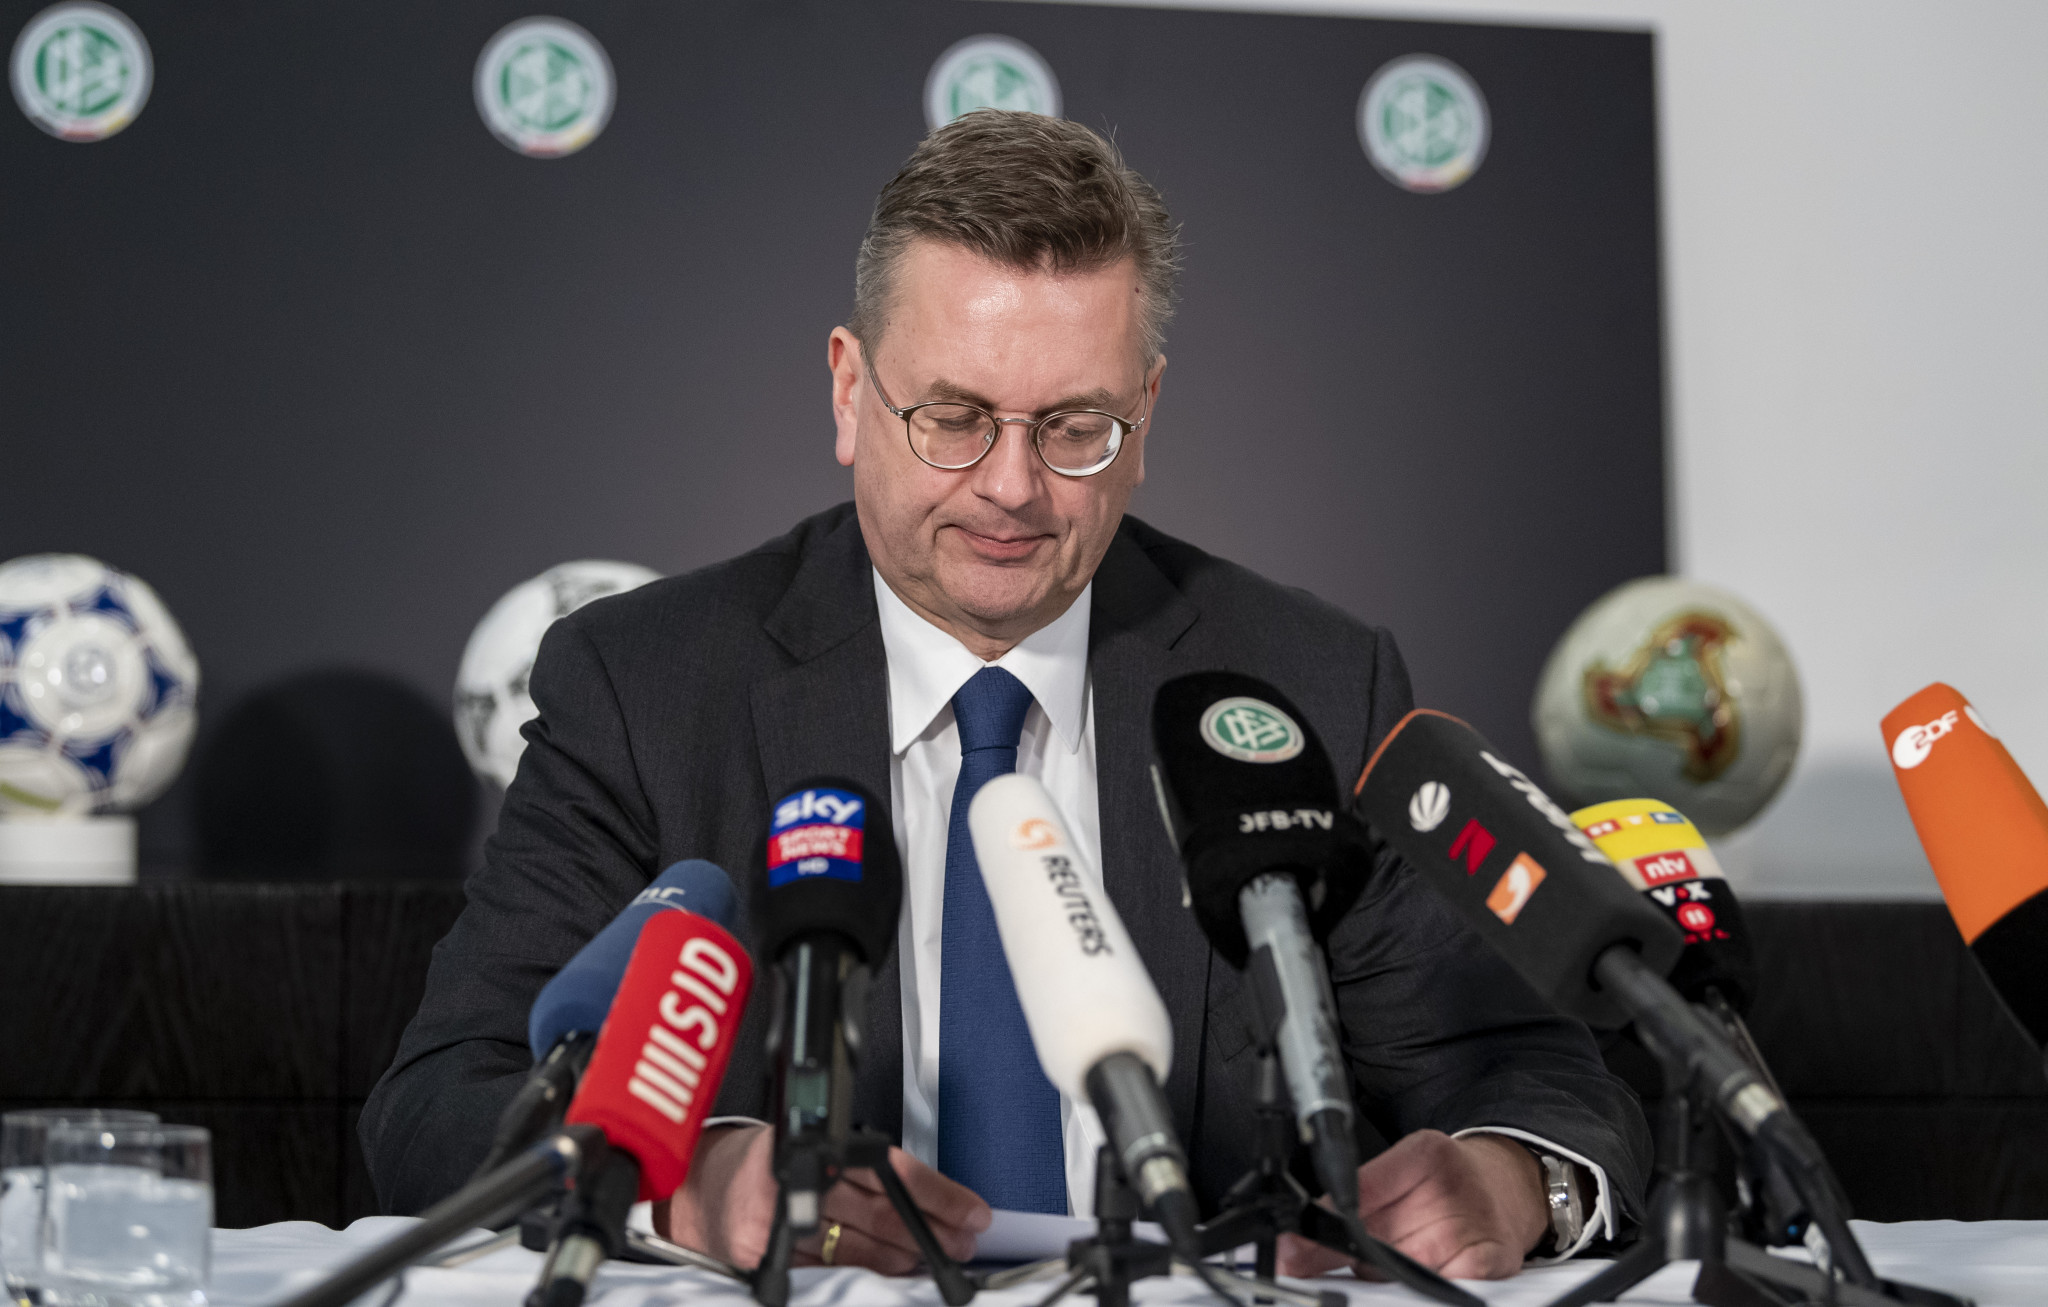 DFB President Reinhard Grindel has resigned ©Getty Images